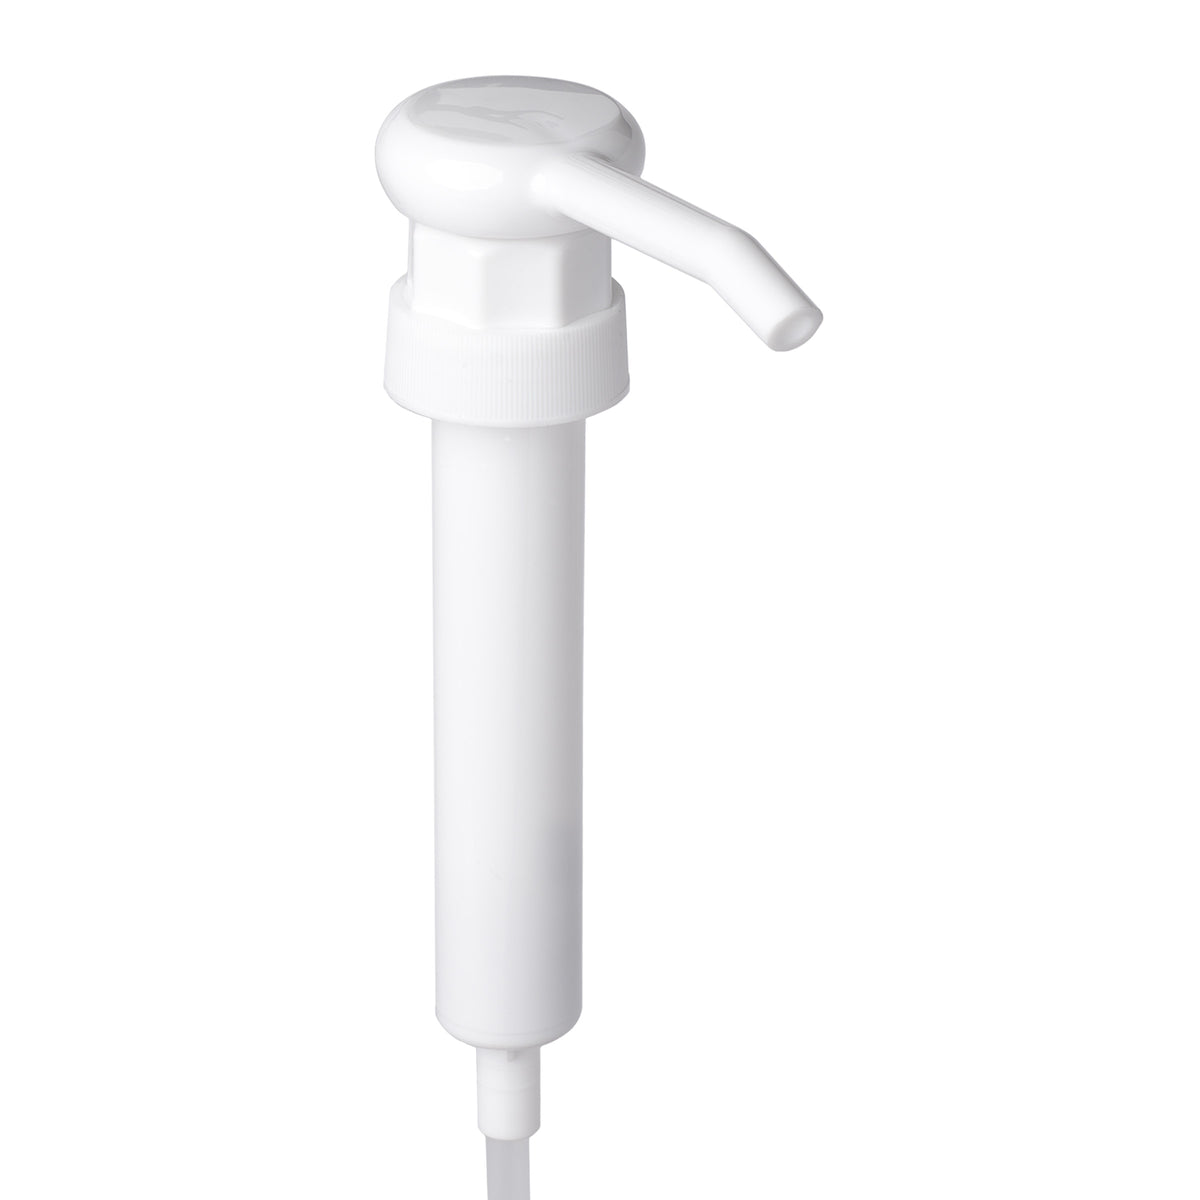  Elmer's Glue - (E343) Dispensing Pump for Glue Jugs, (1 Gallon)  (White) : Industrial & Scientific